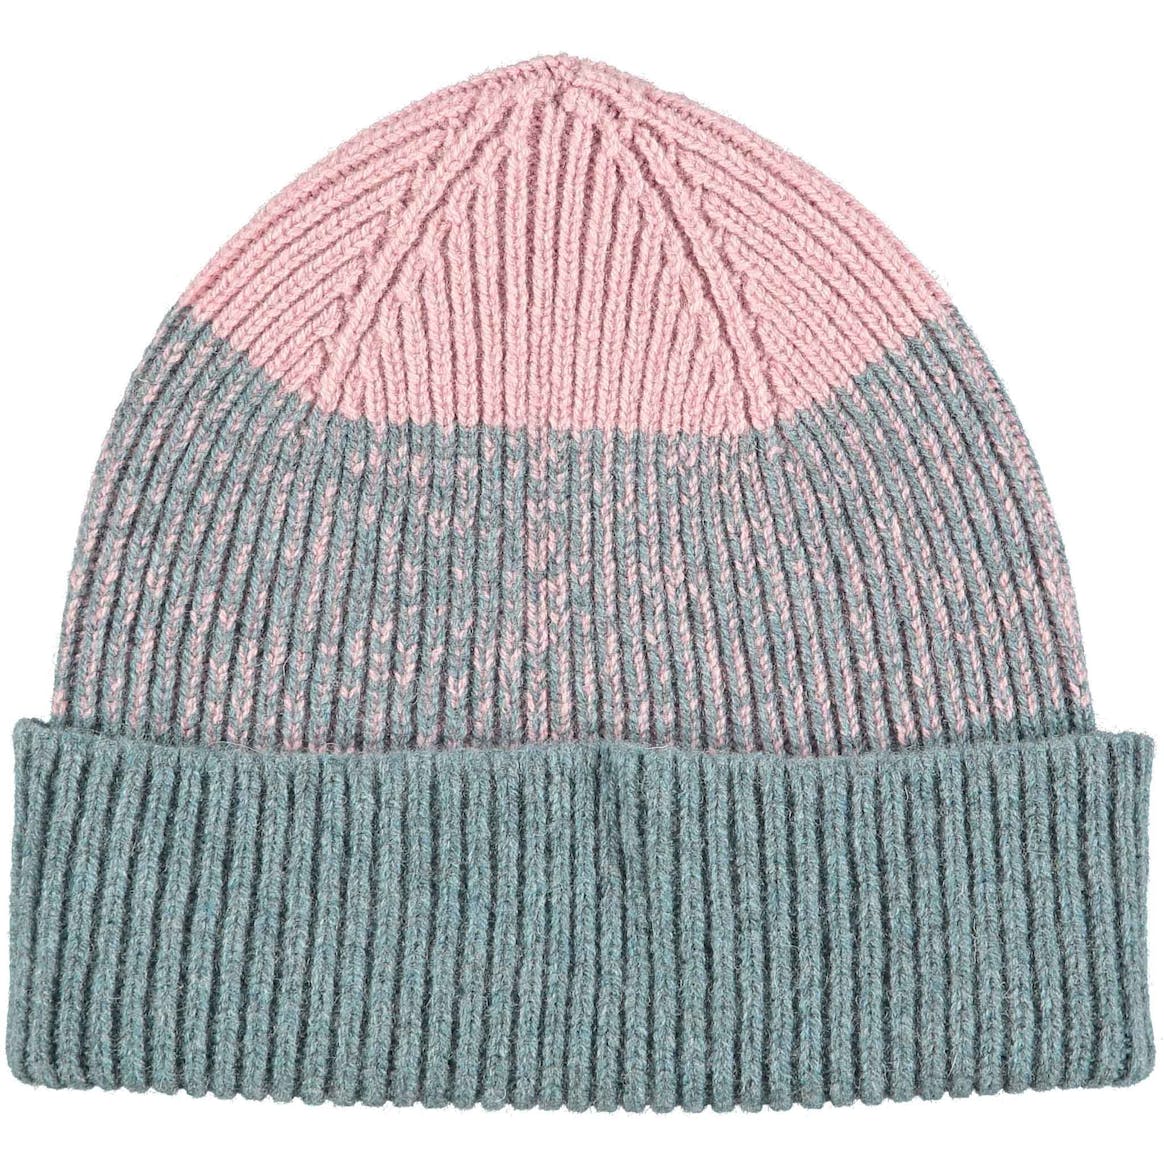 Sea Green & Pink Marl Merino Lambswool Beanie Hat